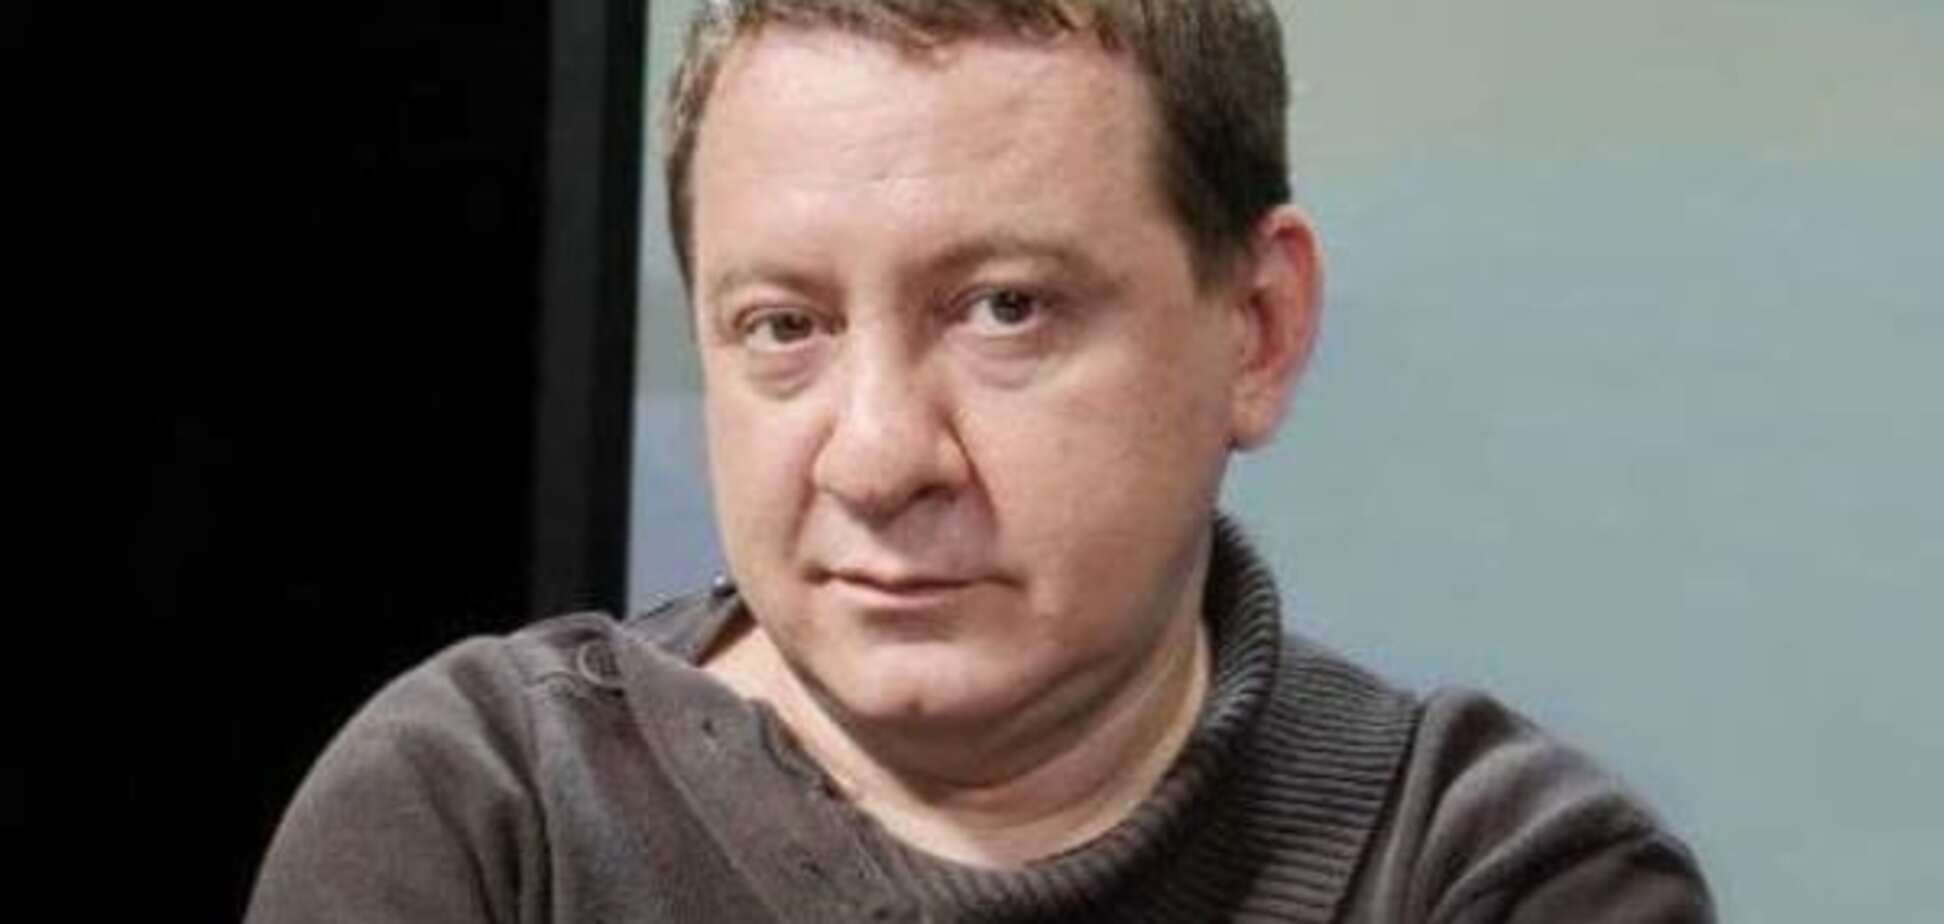 Айдер Муждабаев